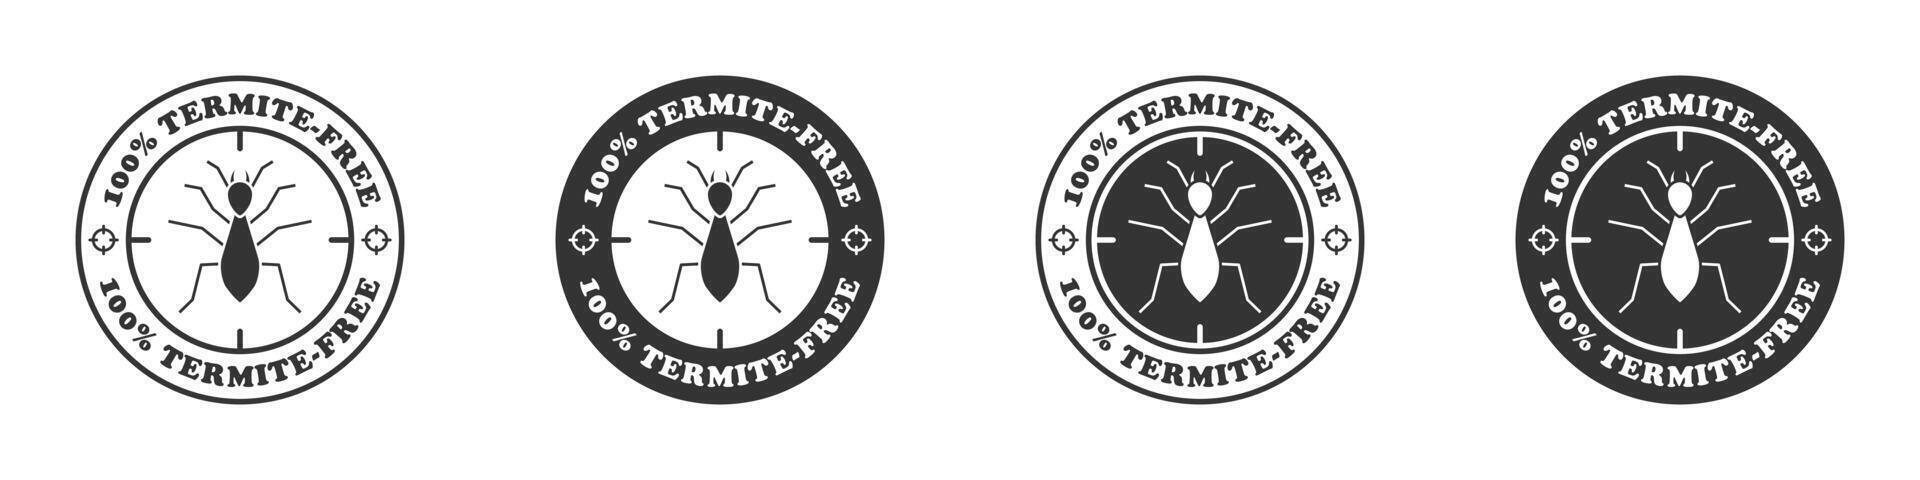 Termite free icon set. Termite target icon. Vector illustration.